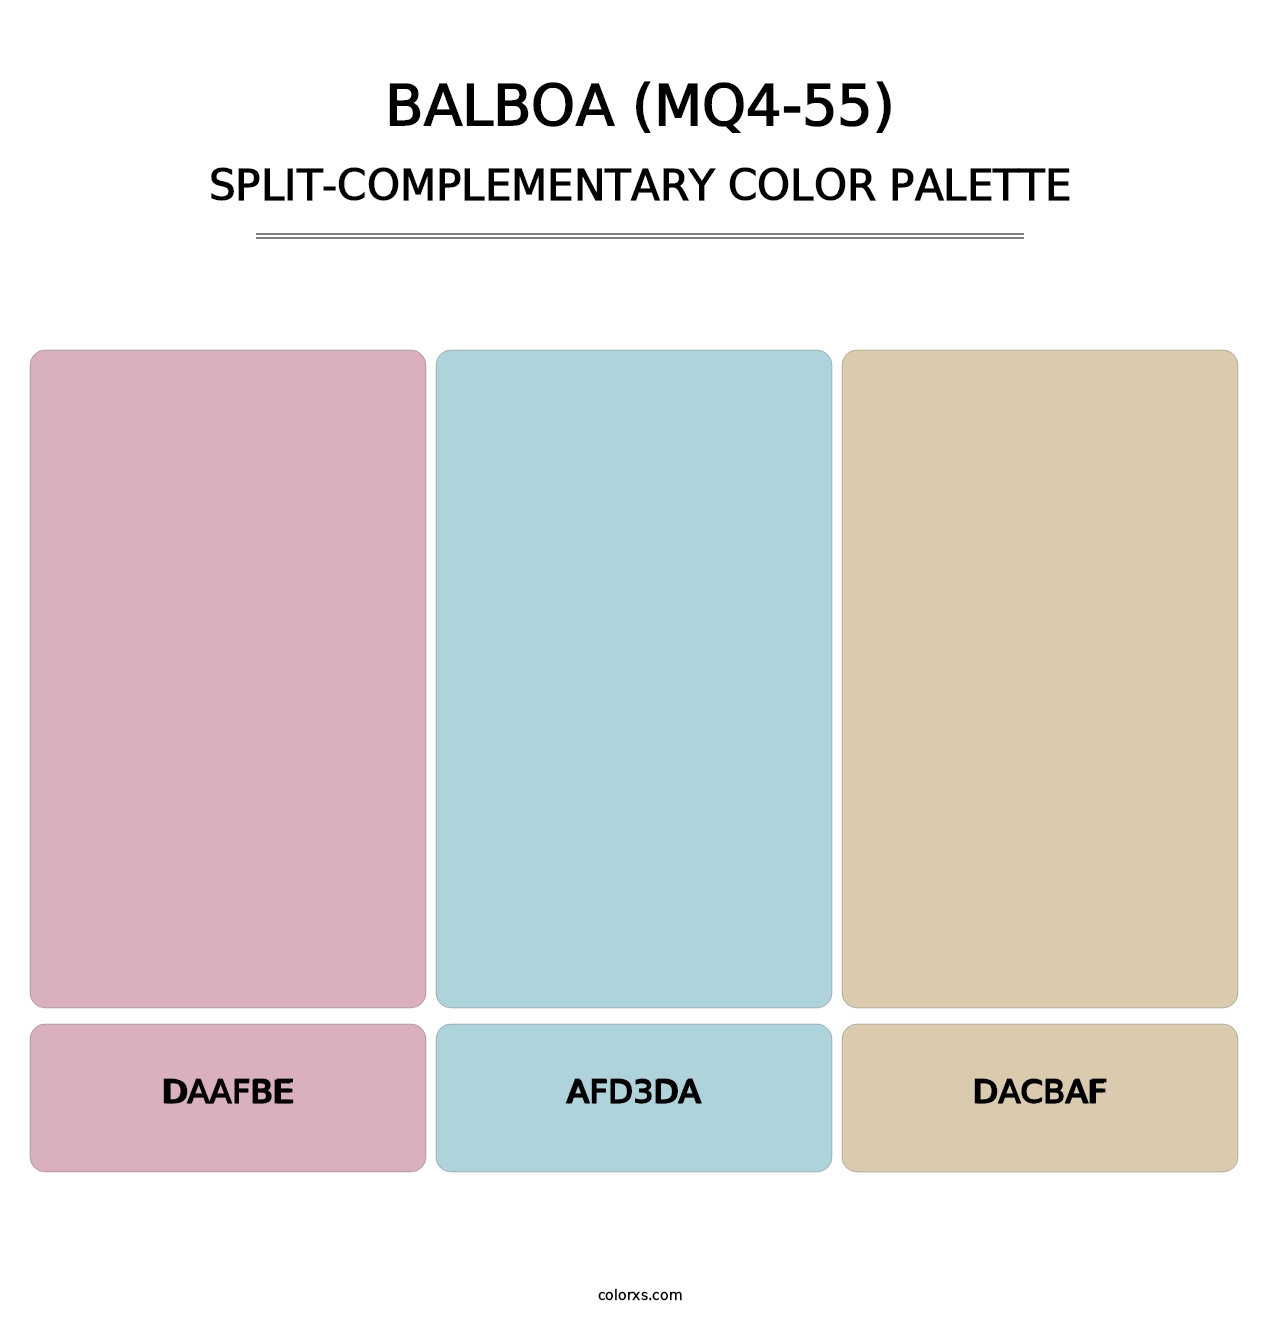 Balboa (MQ4-55) - Split-Complementary Color Palette